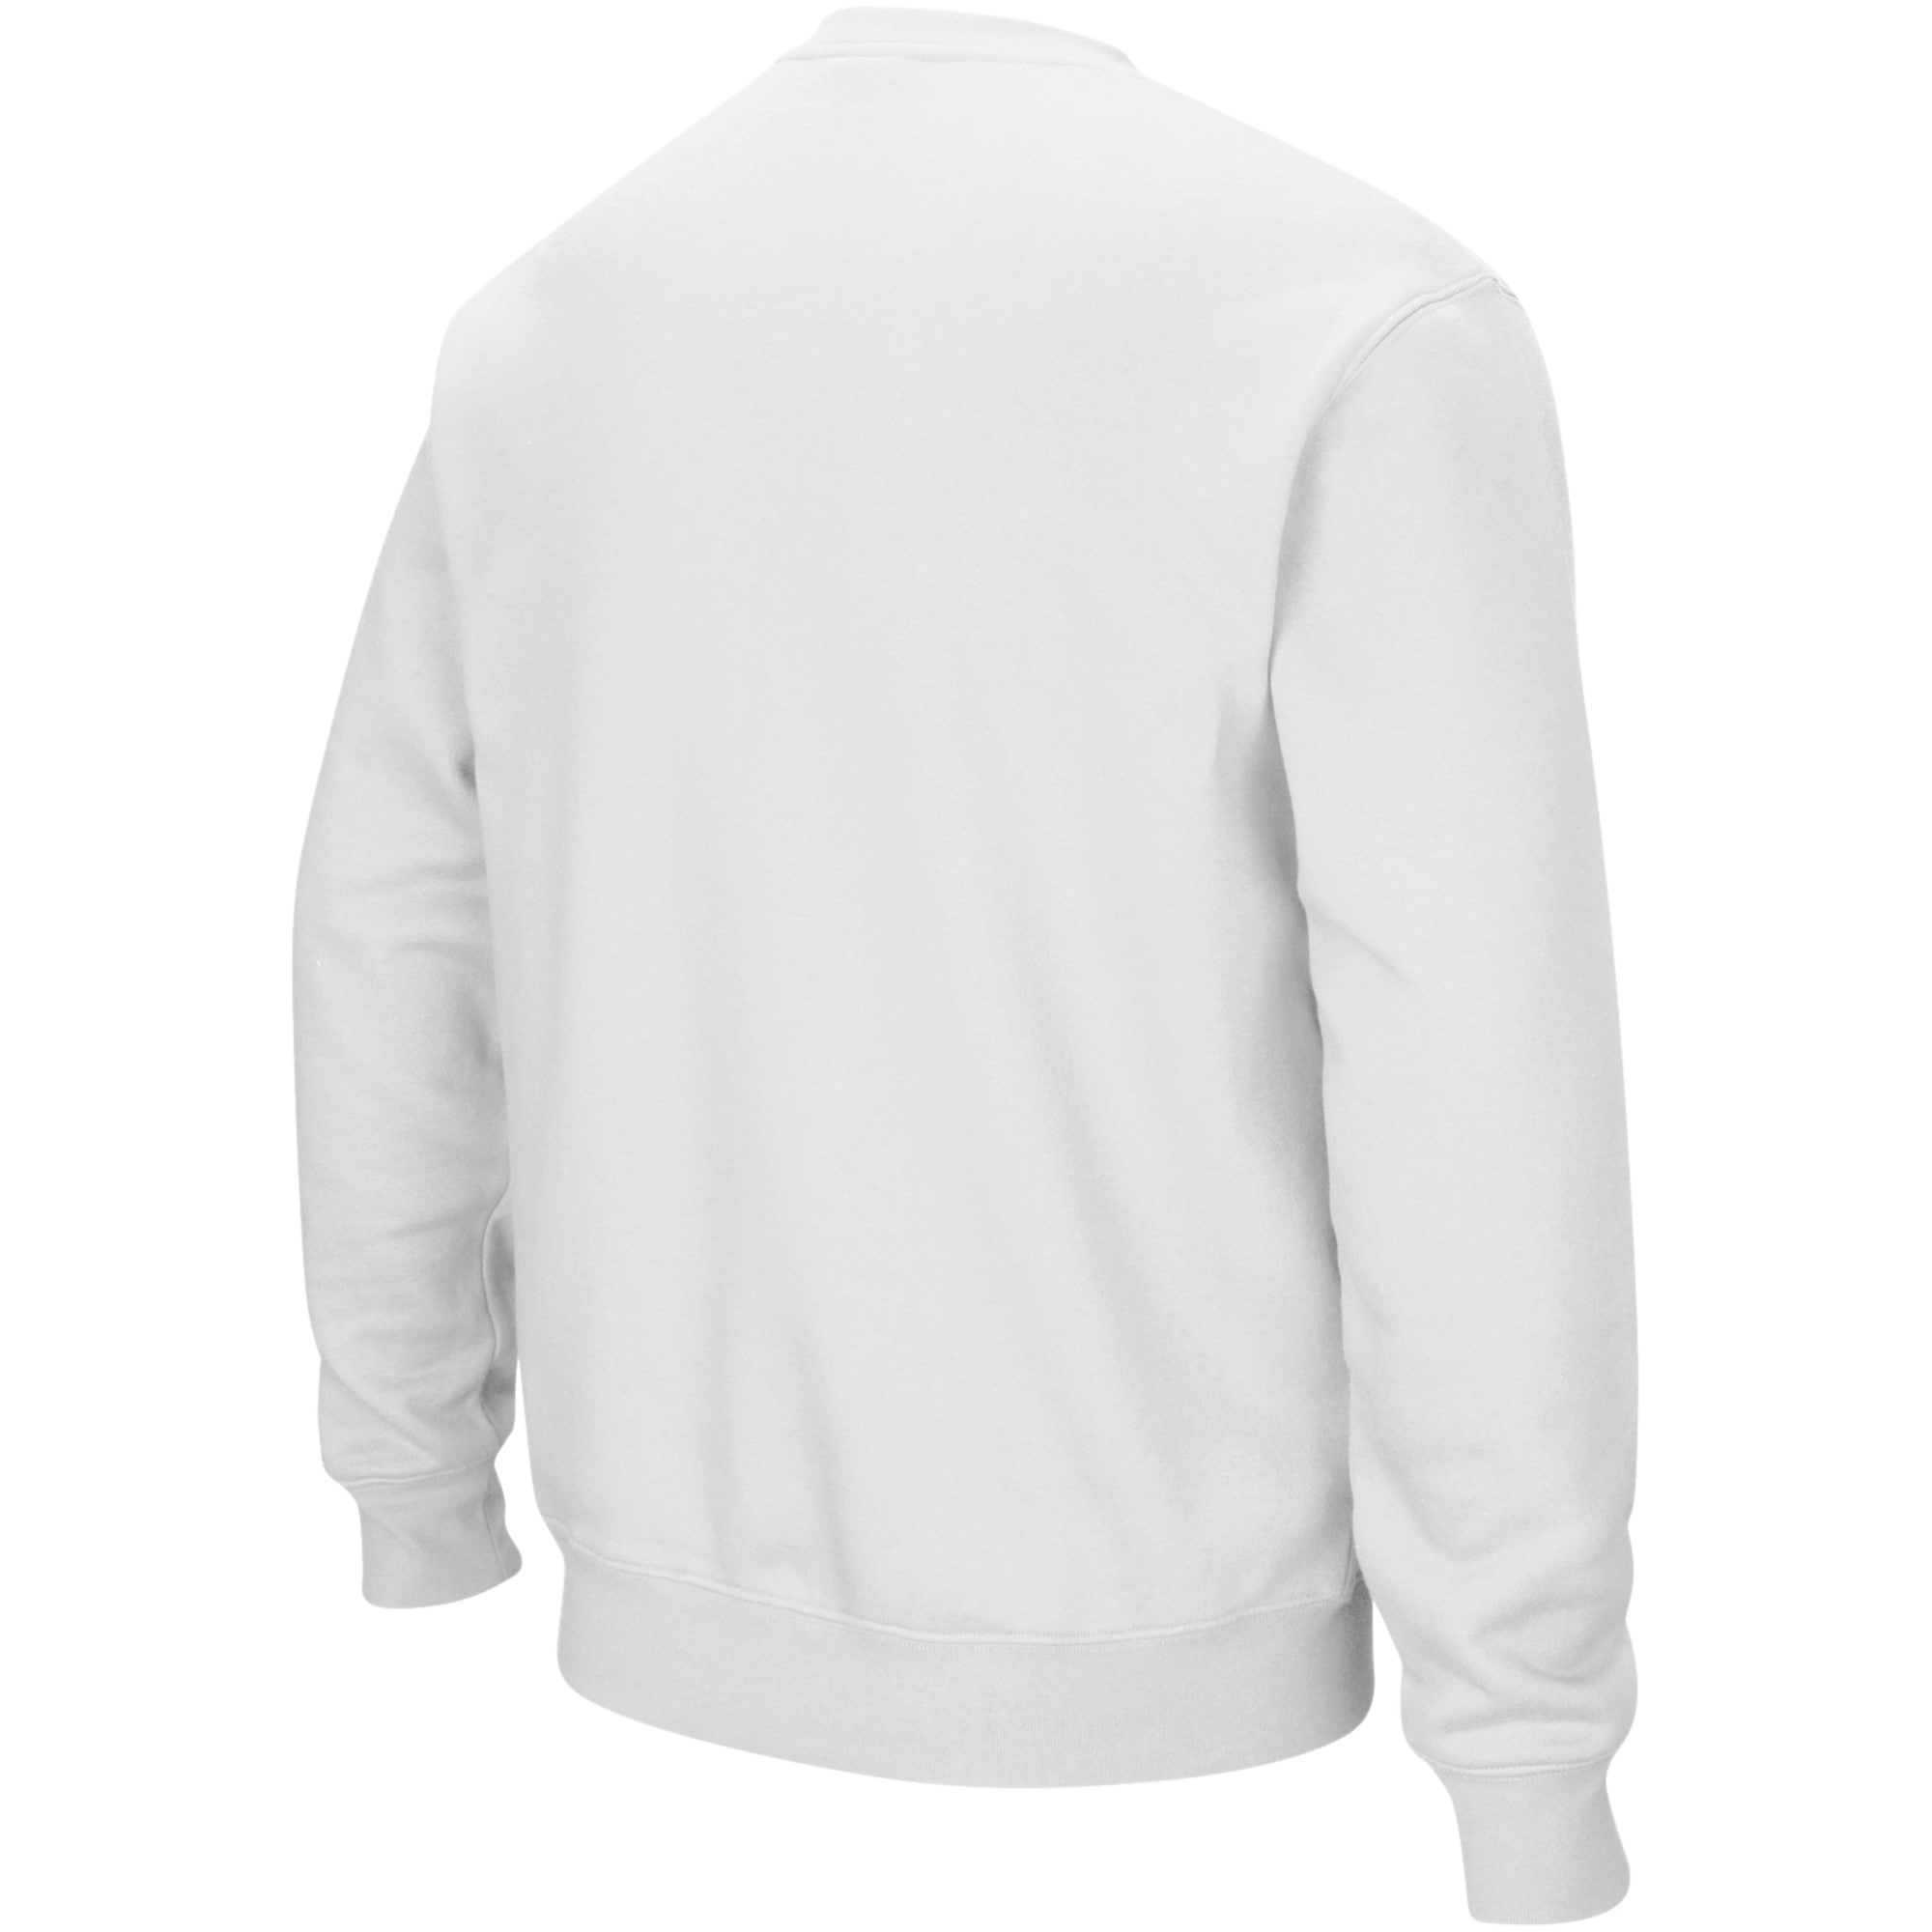 Men's Colosseum White Penn State Nittany Lions Arch & Logo Crew Neck Sweatshirt - image 2 of 4